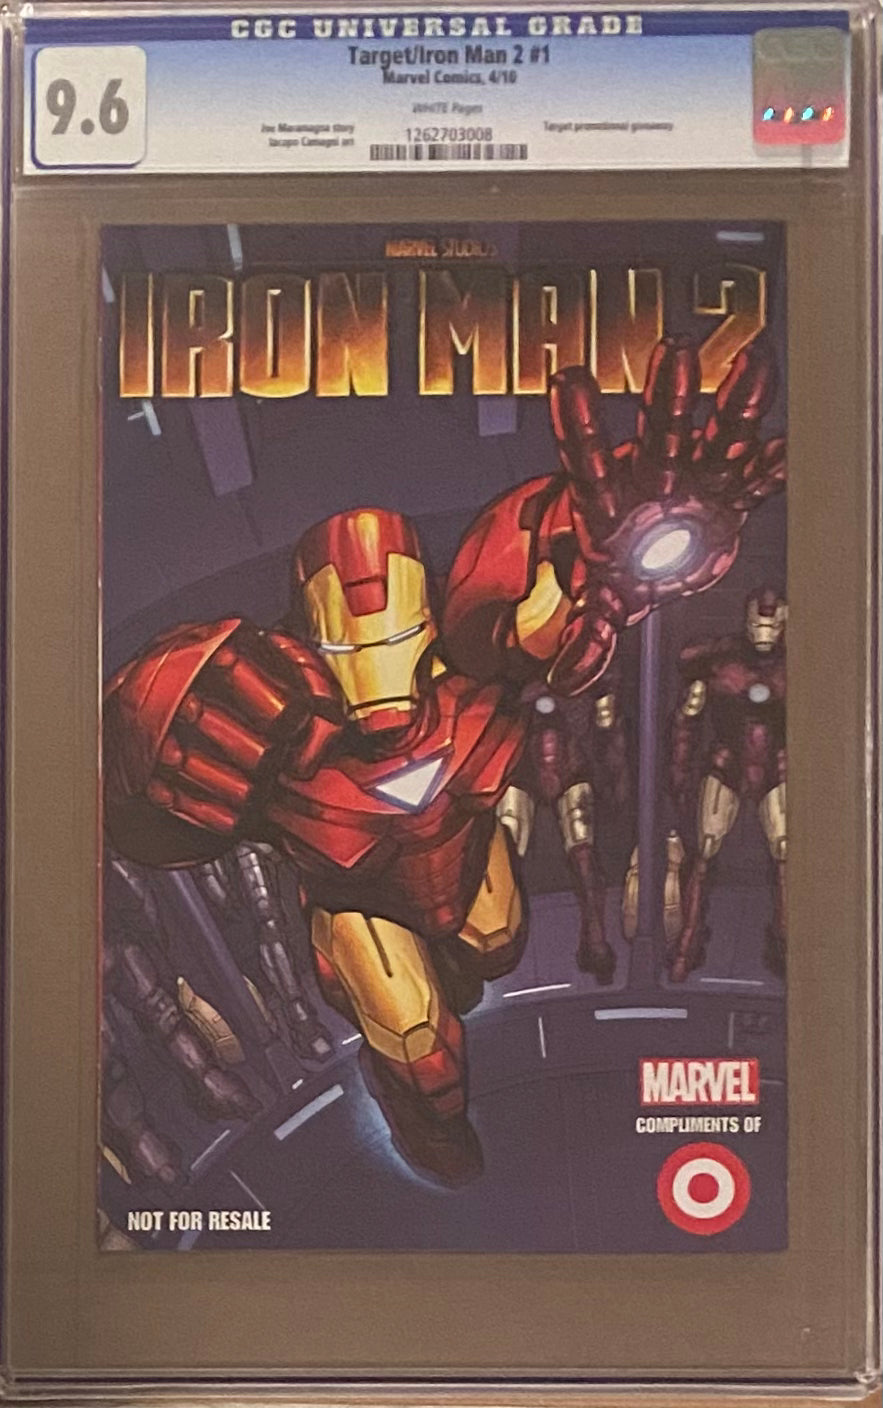 Target/Iron Man 2 #1 CGC 9.6